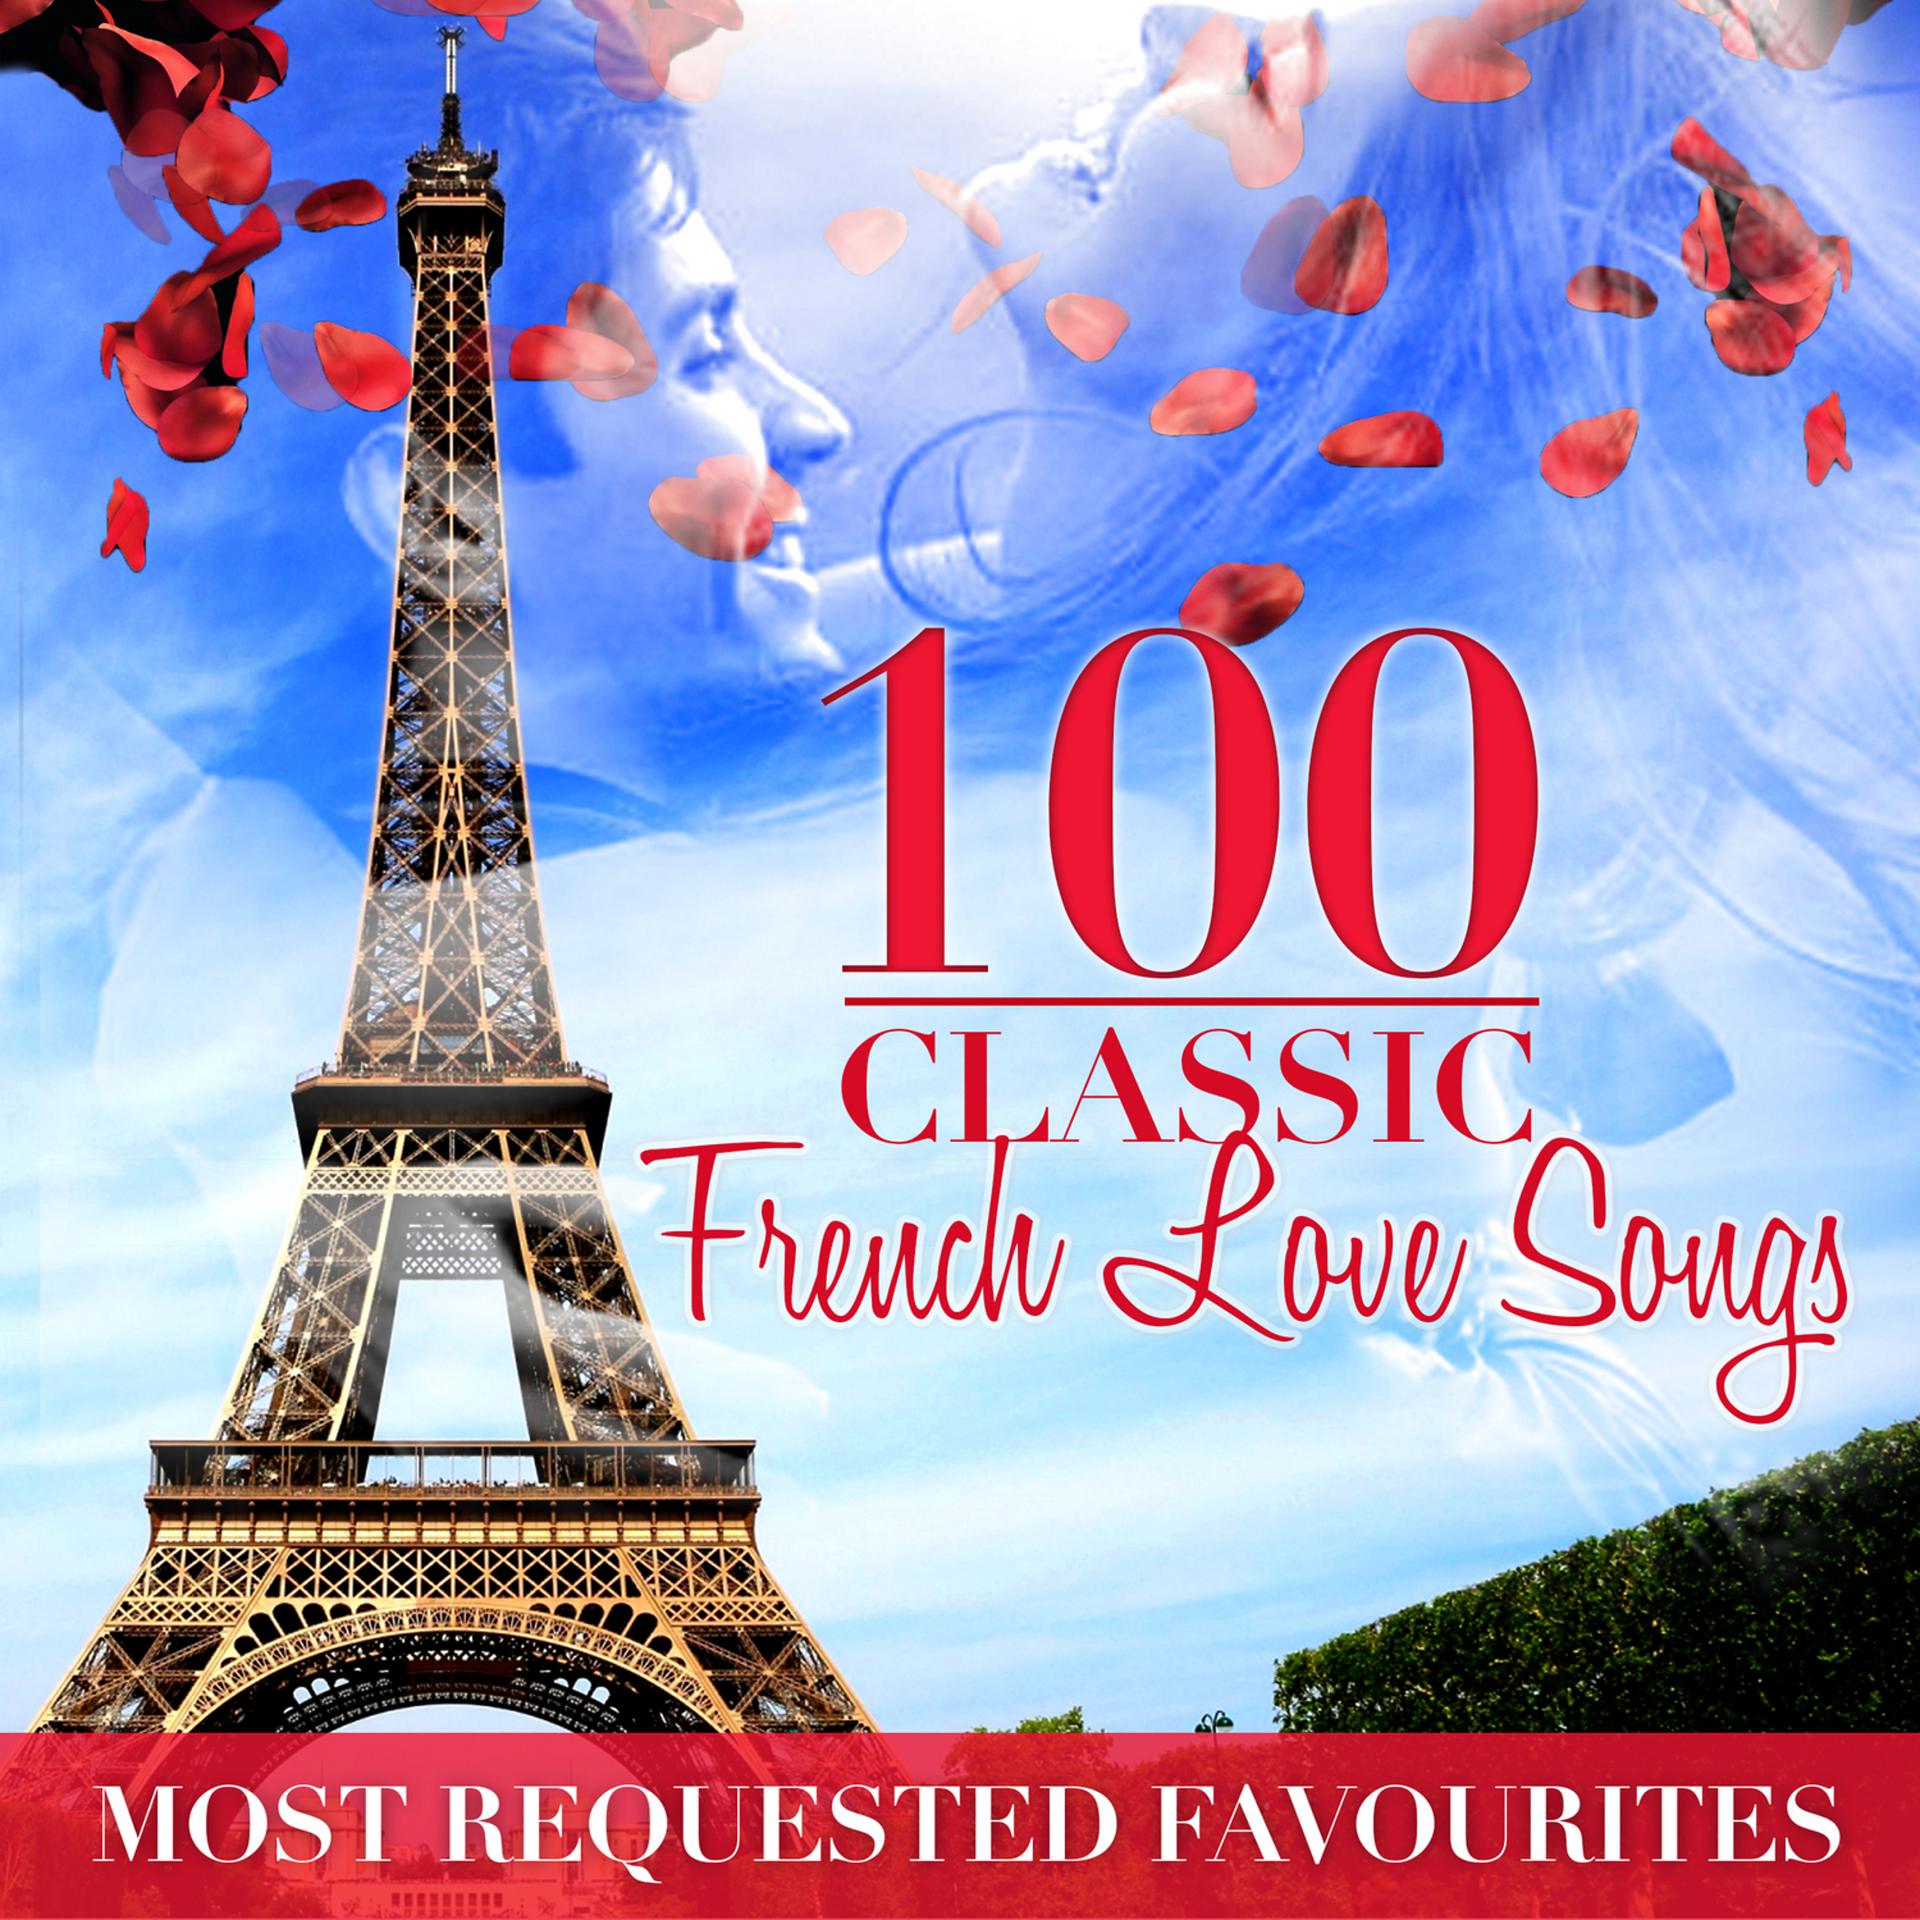 France Love Songs обложки. 100 French Love Songs. 100 Обложка. C'est l'amour: Romantic French Classics фото. Хорошая французская музыка слушать